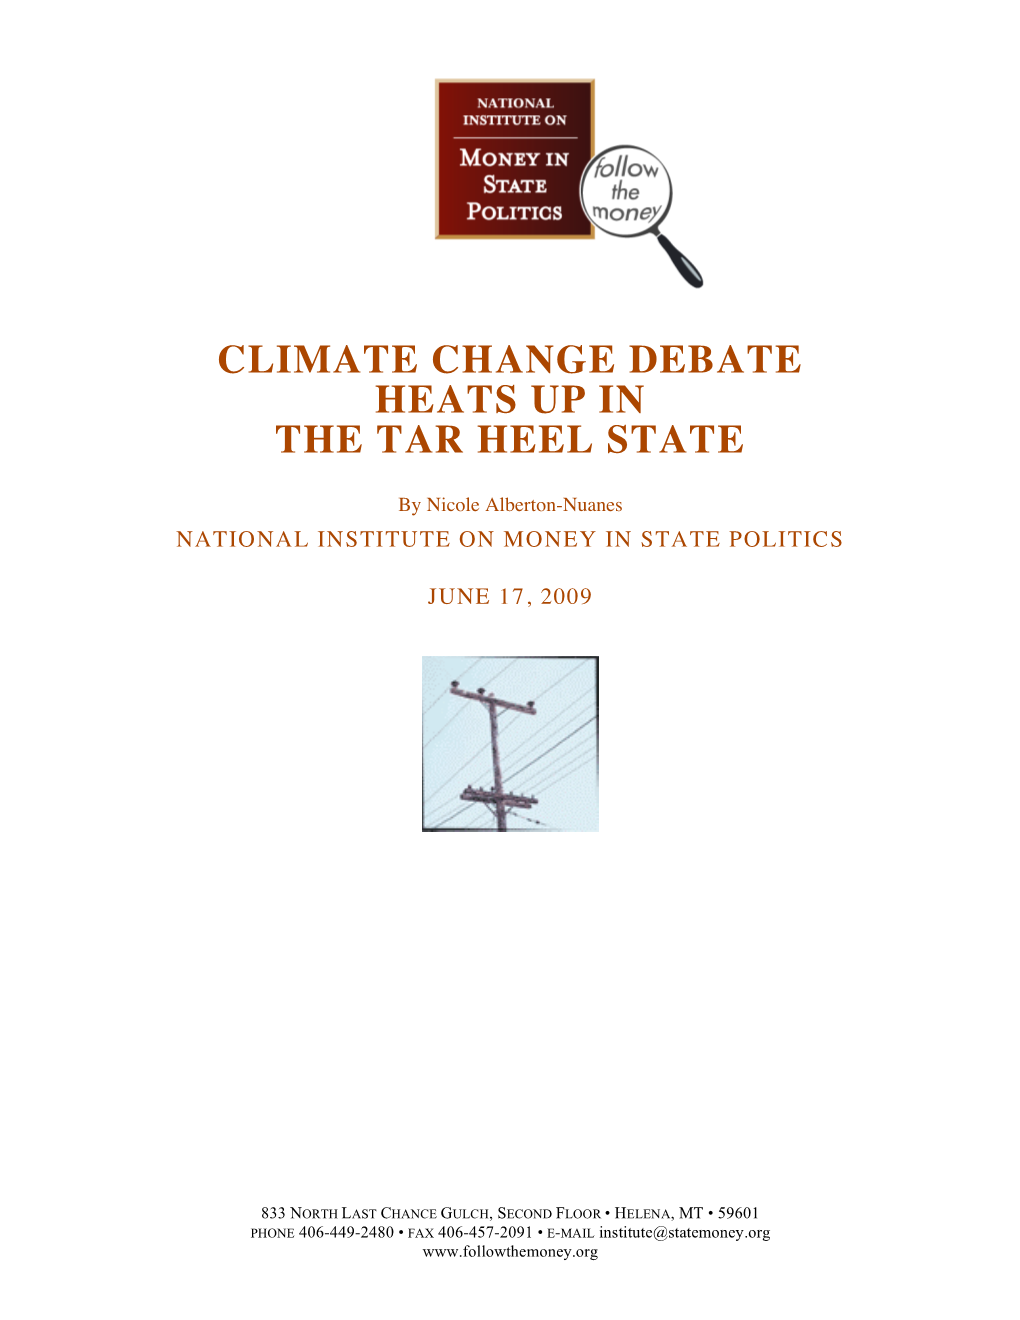 Climate Change Debate Heats up in the Tar Heel State